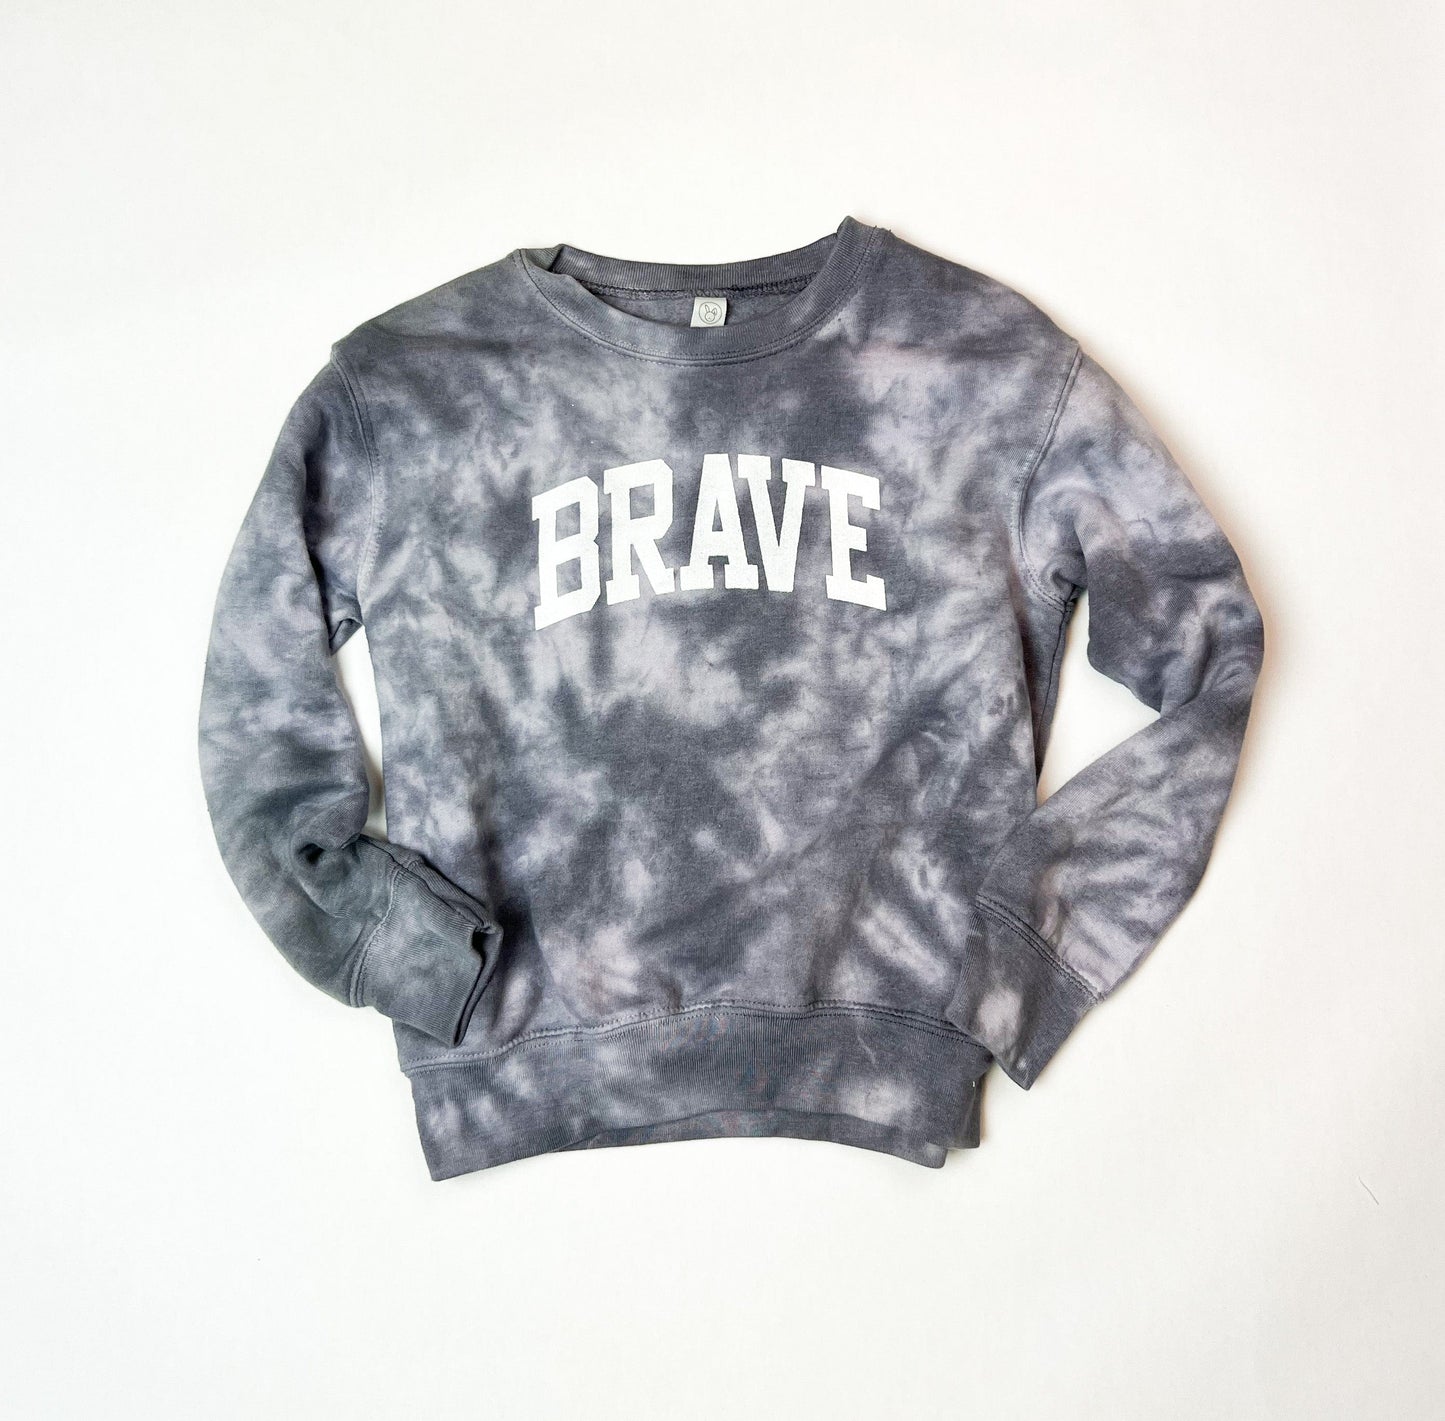 "Brave" Tie Dye Crewneck Sweatshirt